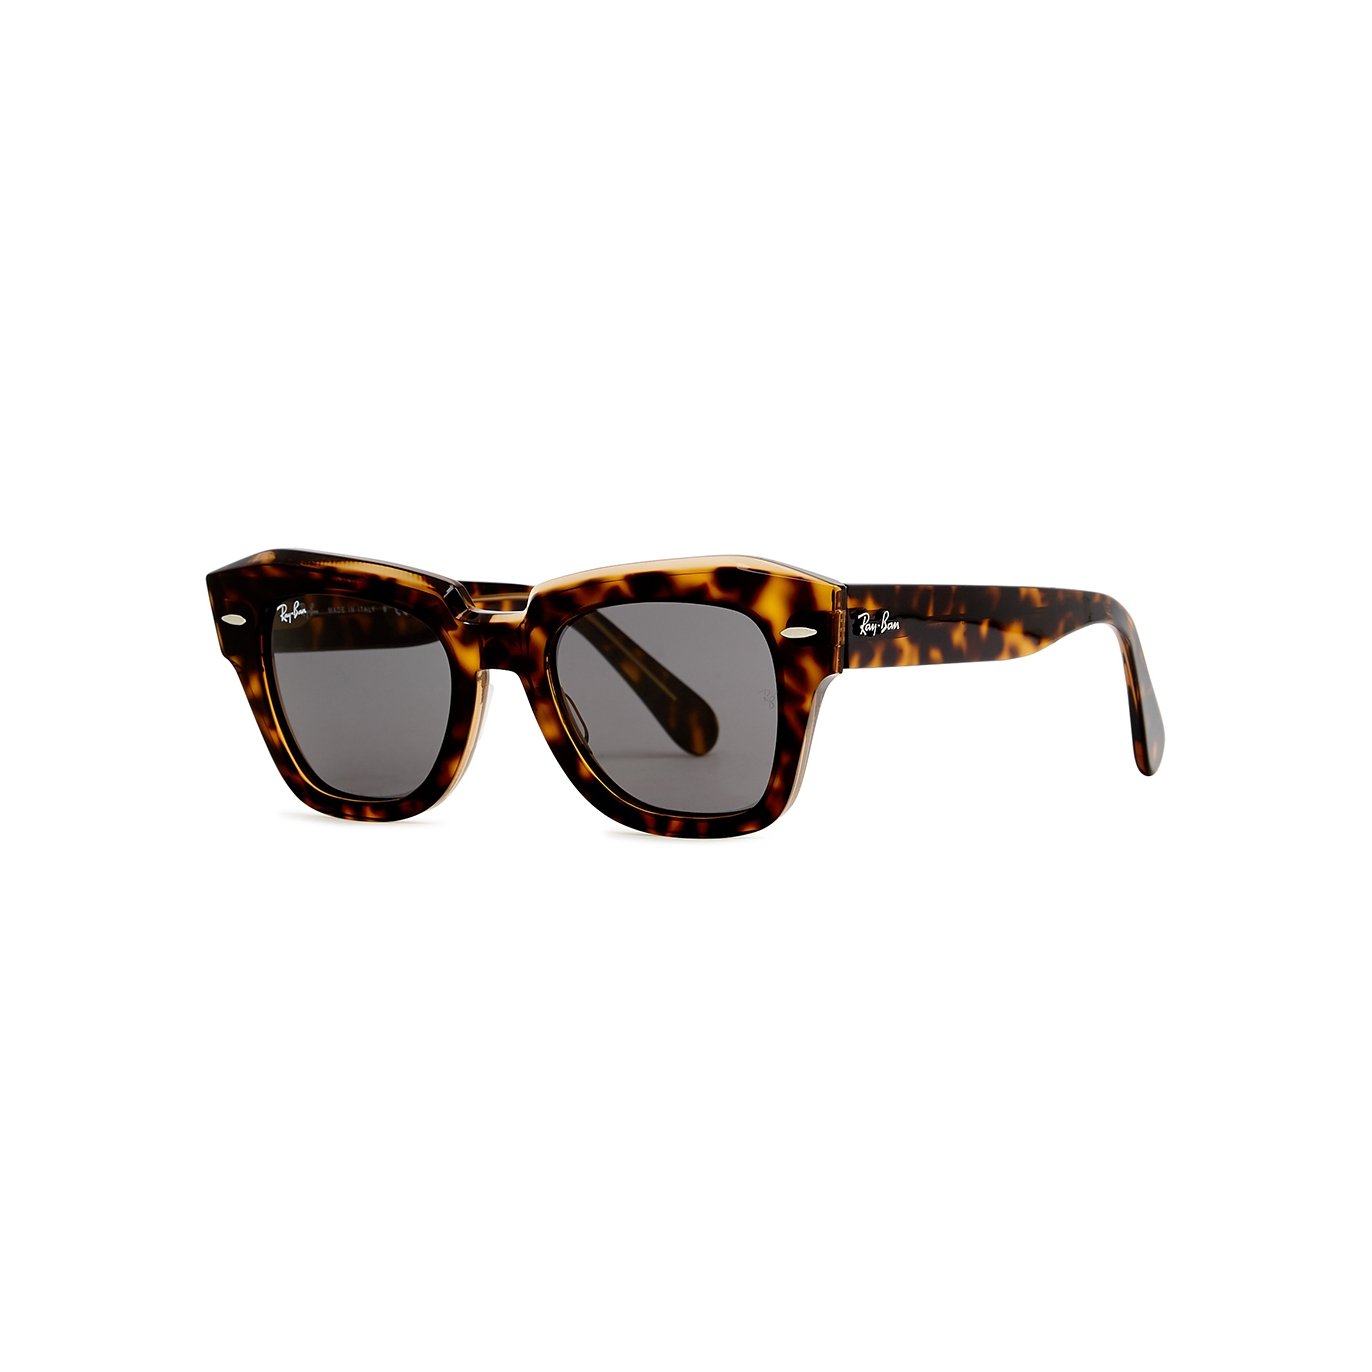 Ray-Ban State Street Tortoiseshell Wayfarer Sunglasses, Sunglasses - Brown